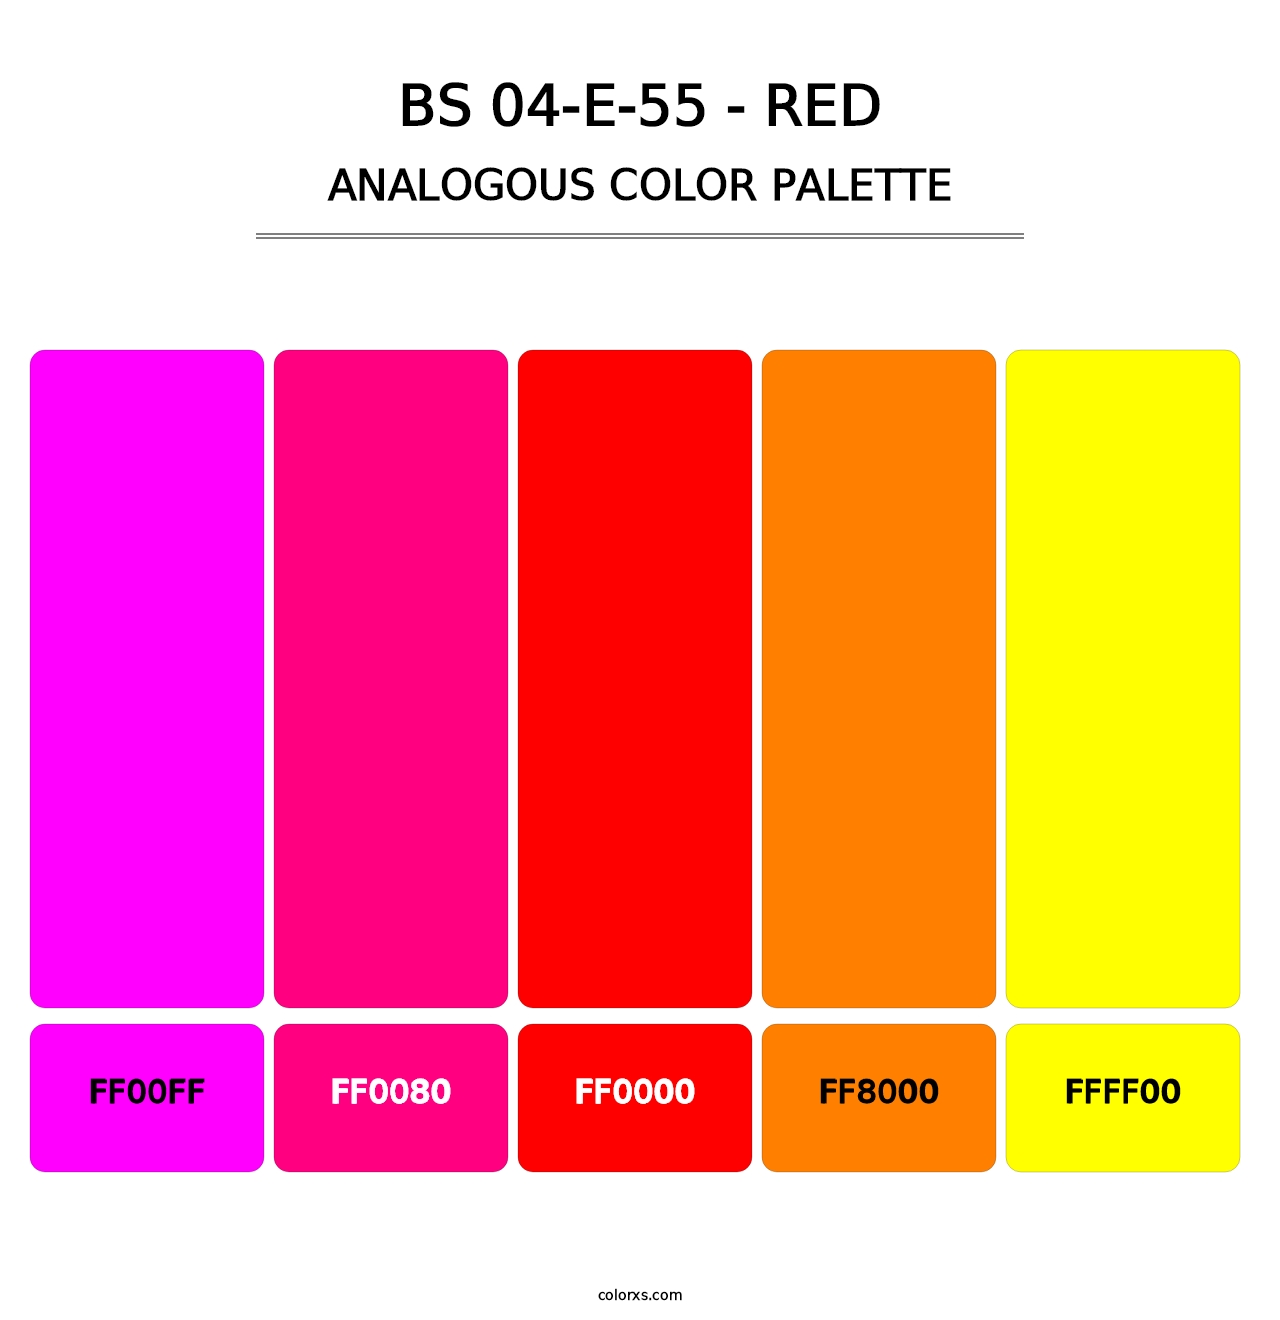 BS 04-E-55 - Red - Analogous Color Palette